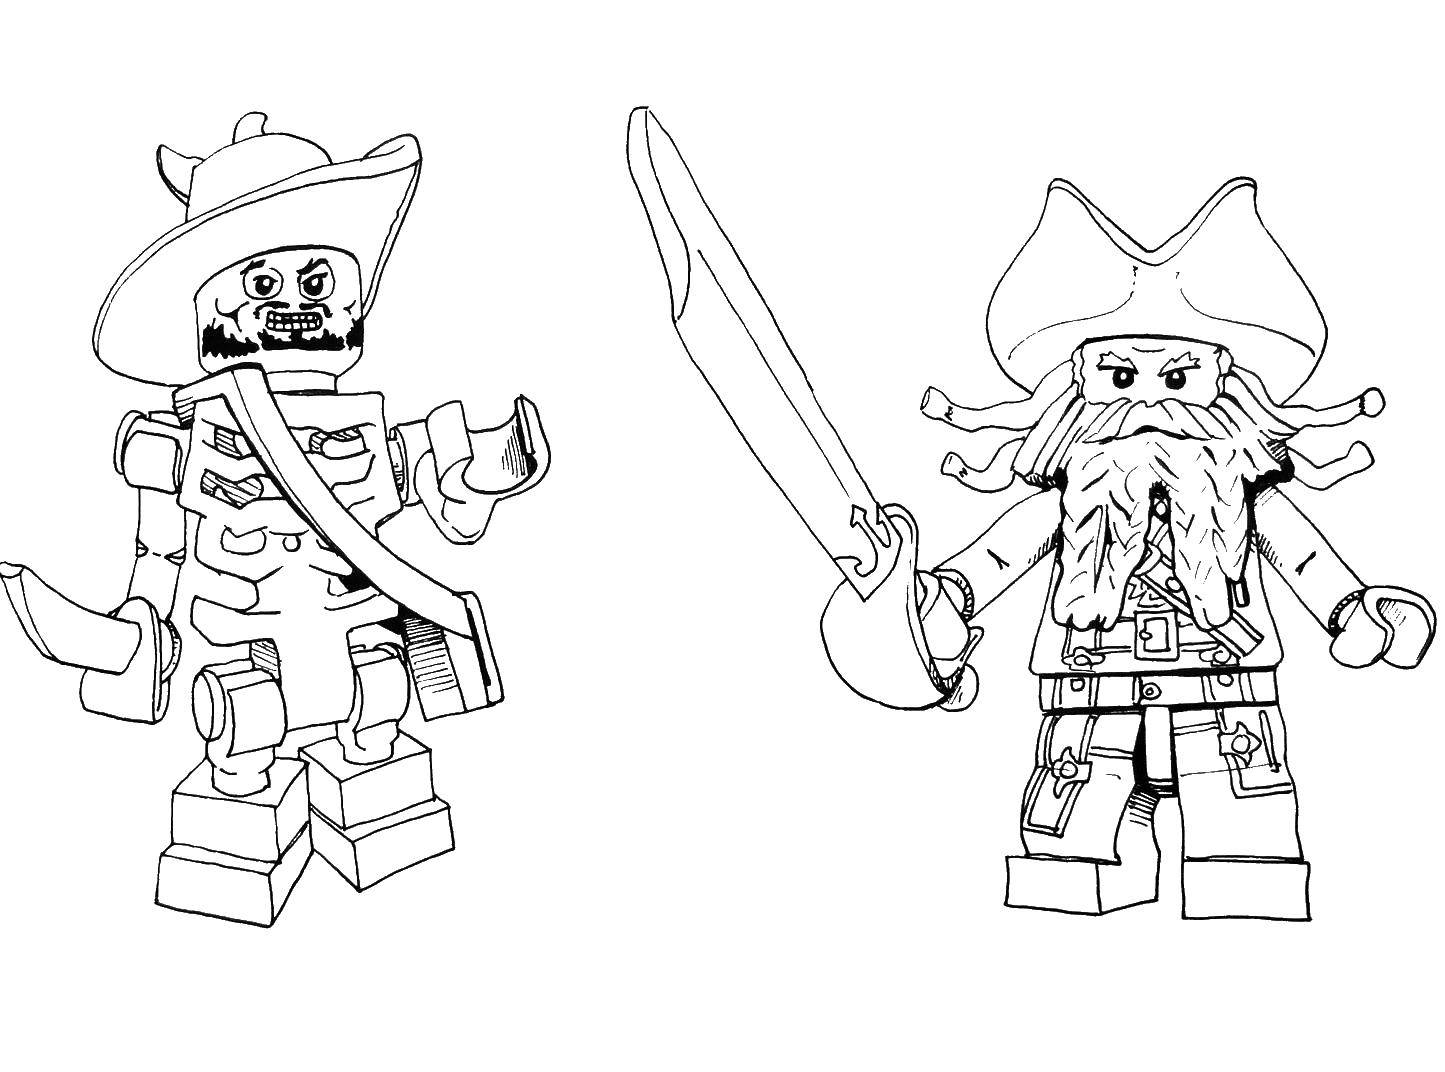 Coloring LEGO pirates. Category LEGO. Tags:  pirates, LEGO.